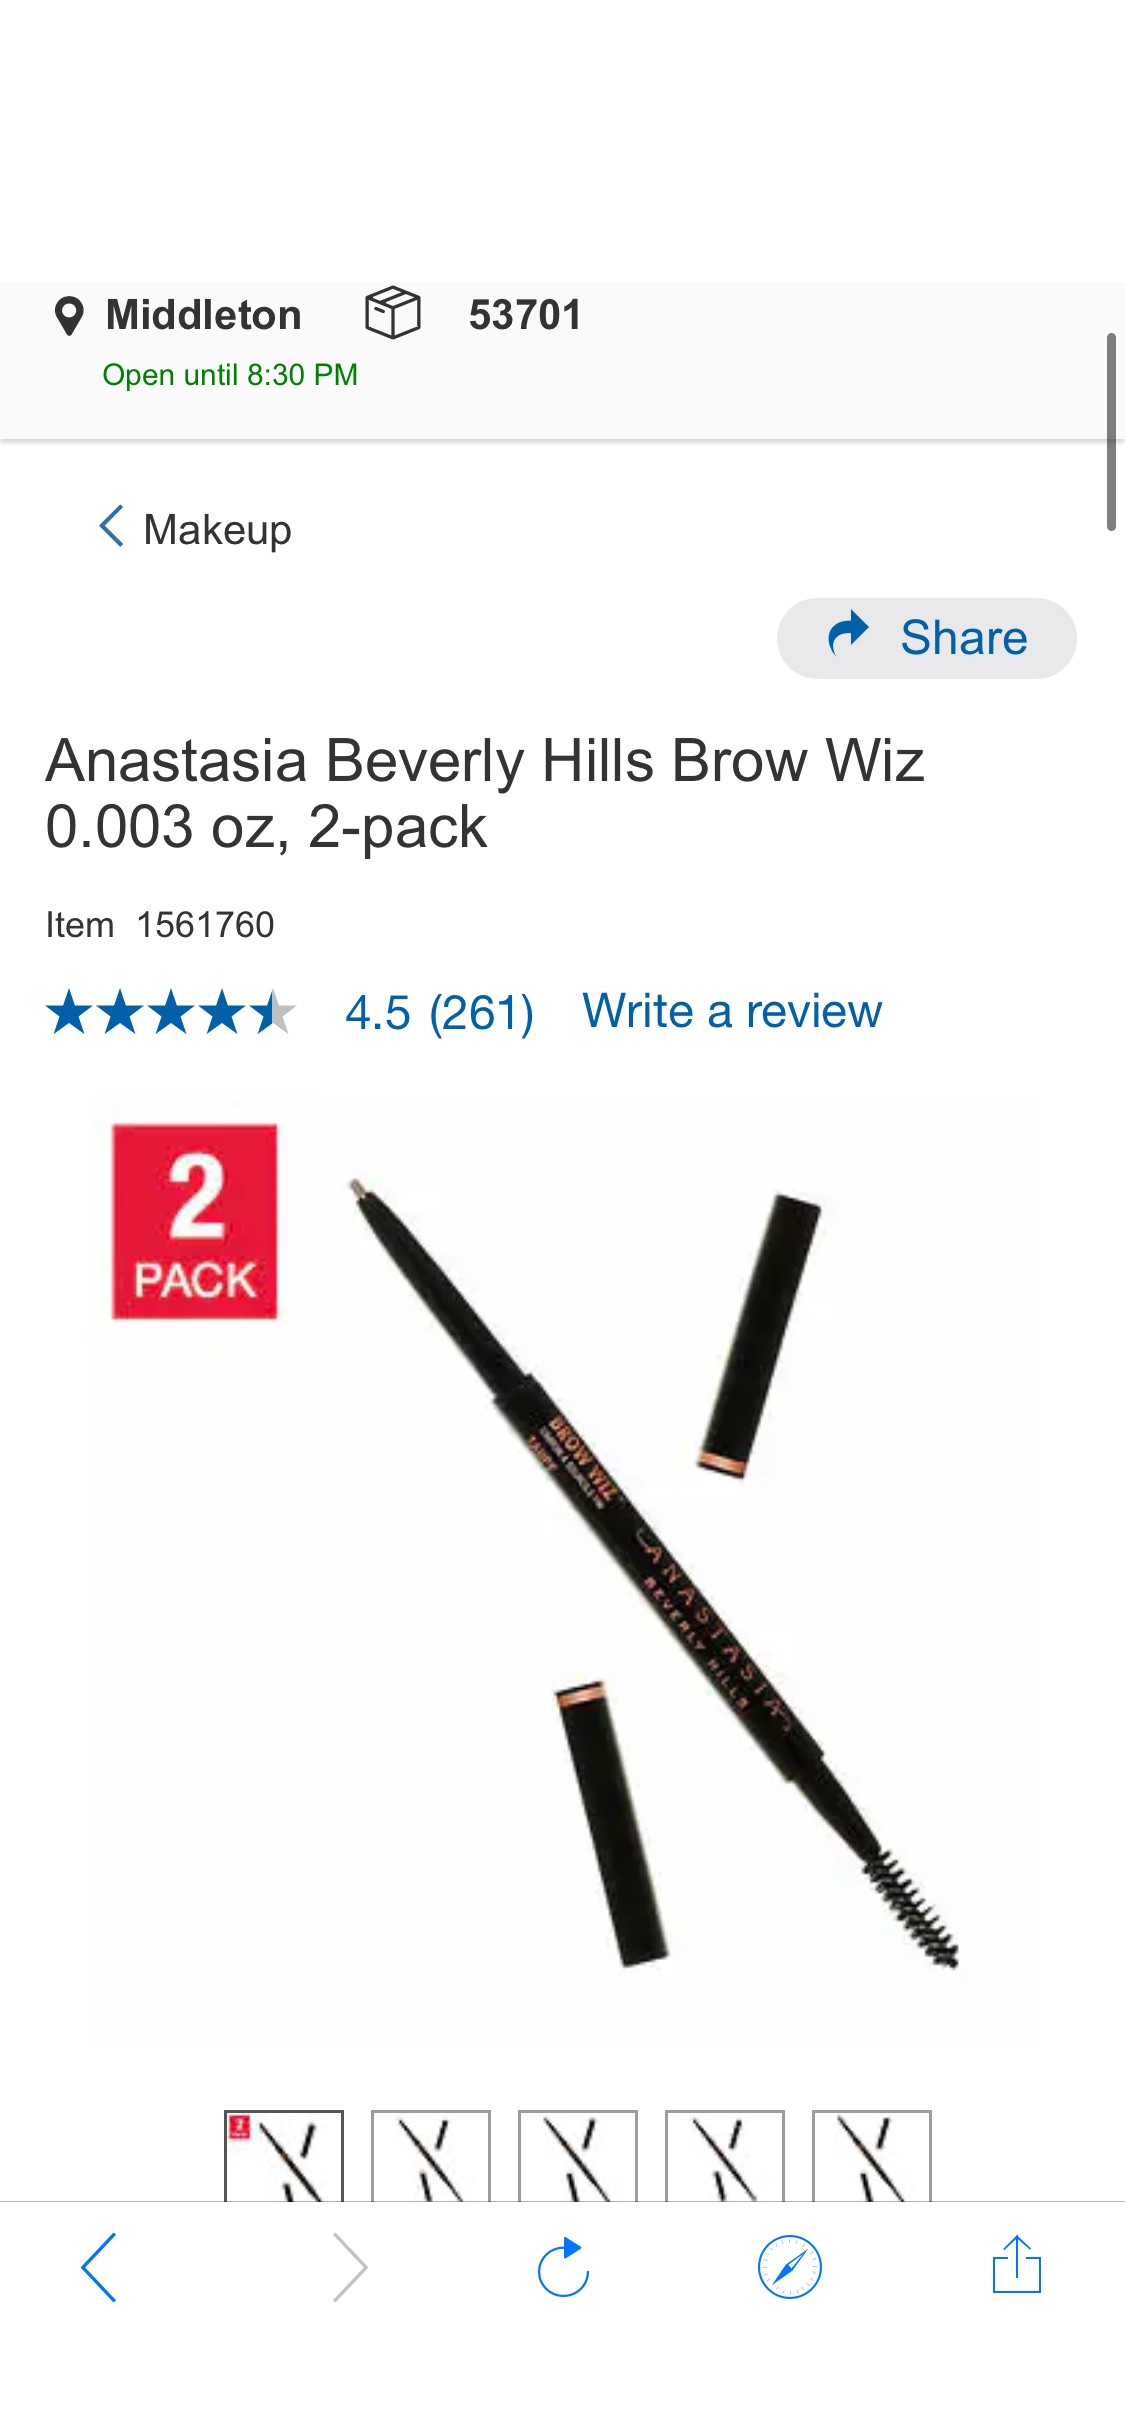 Anastasia Beverly Hills Brow Wiz 0.003 oz, 2-pack | Costco. ABH极细眉笔2支